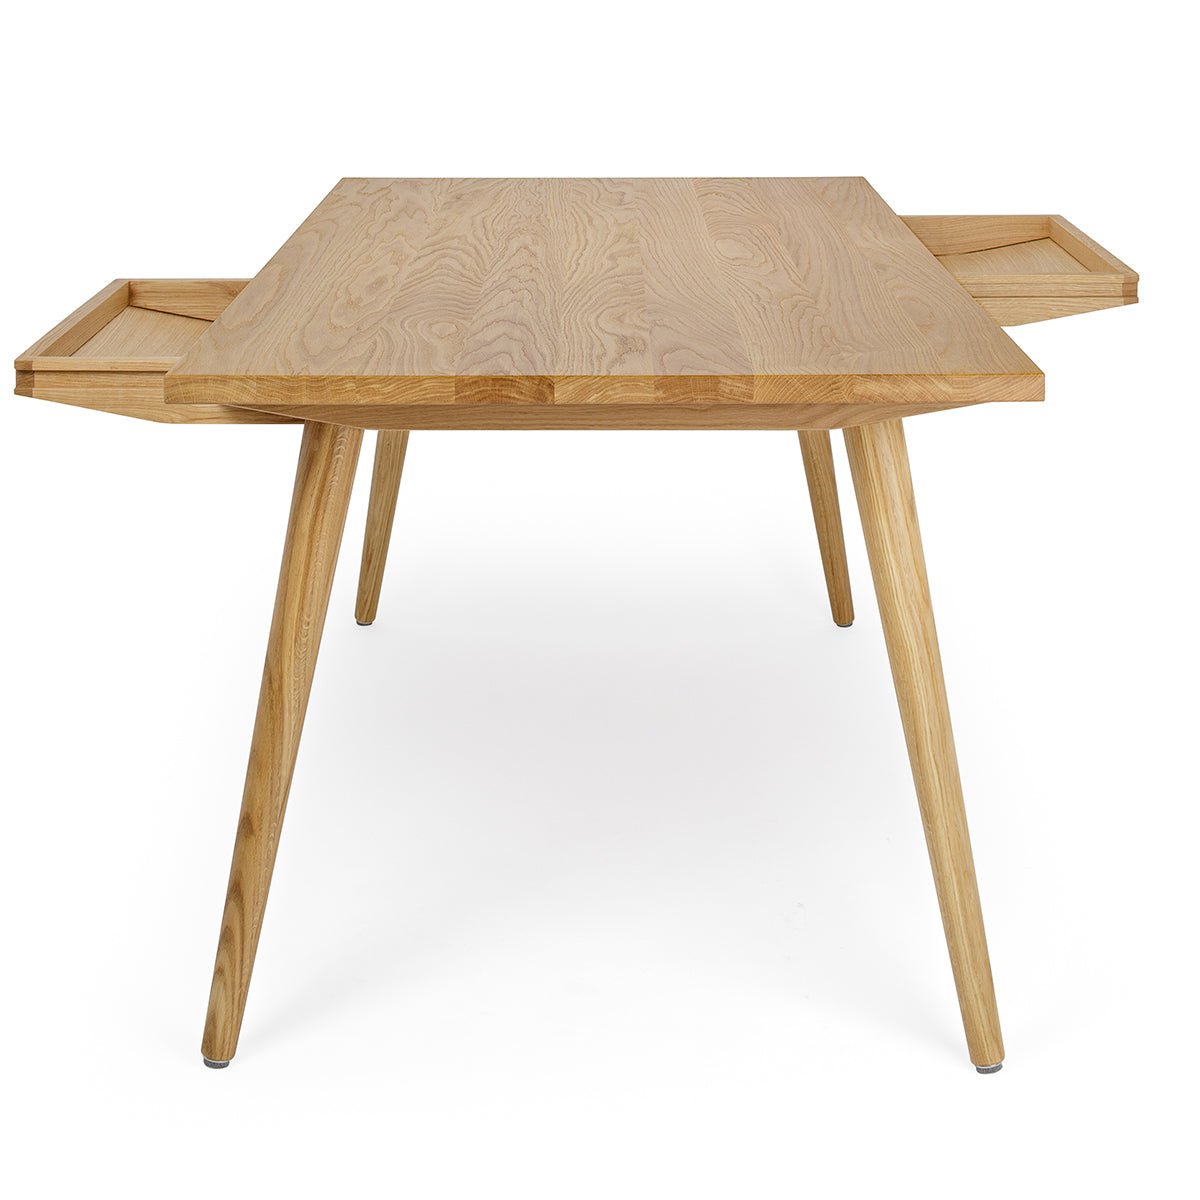 NIKKLAS table with drawers in oak wood – natural elegance – Anton